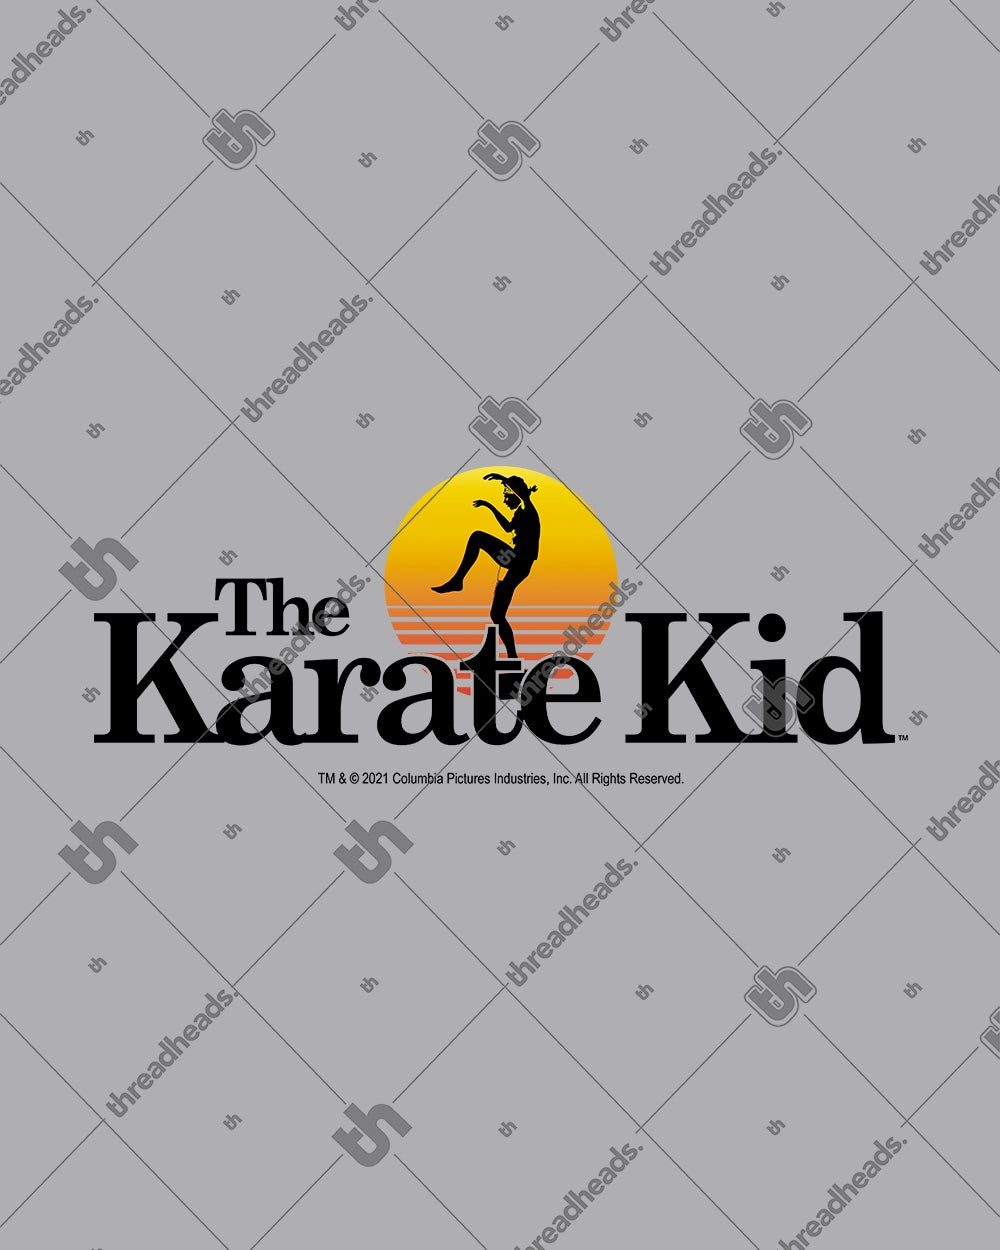 Karate Kid Logo Sweater Australia Online #colour_grey